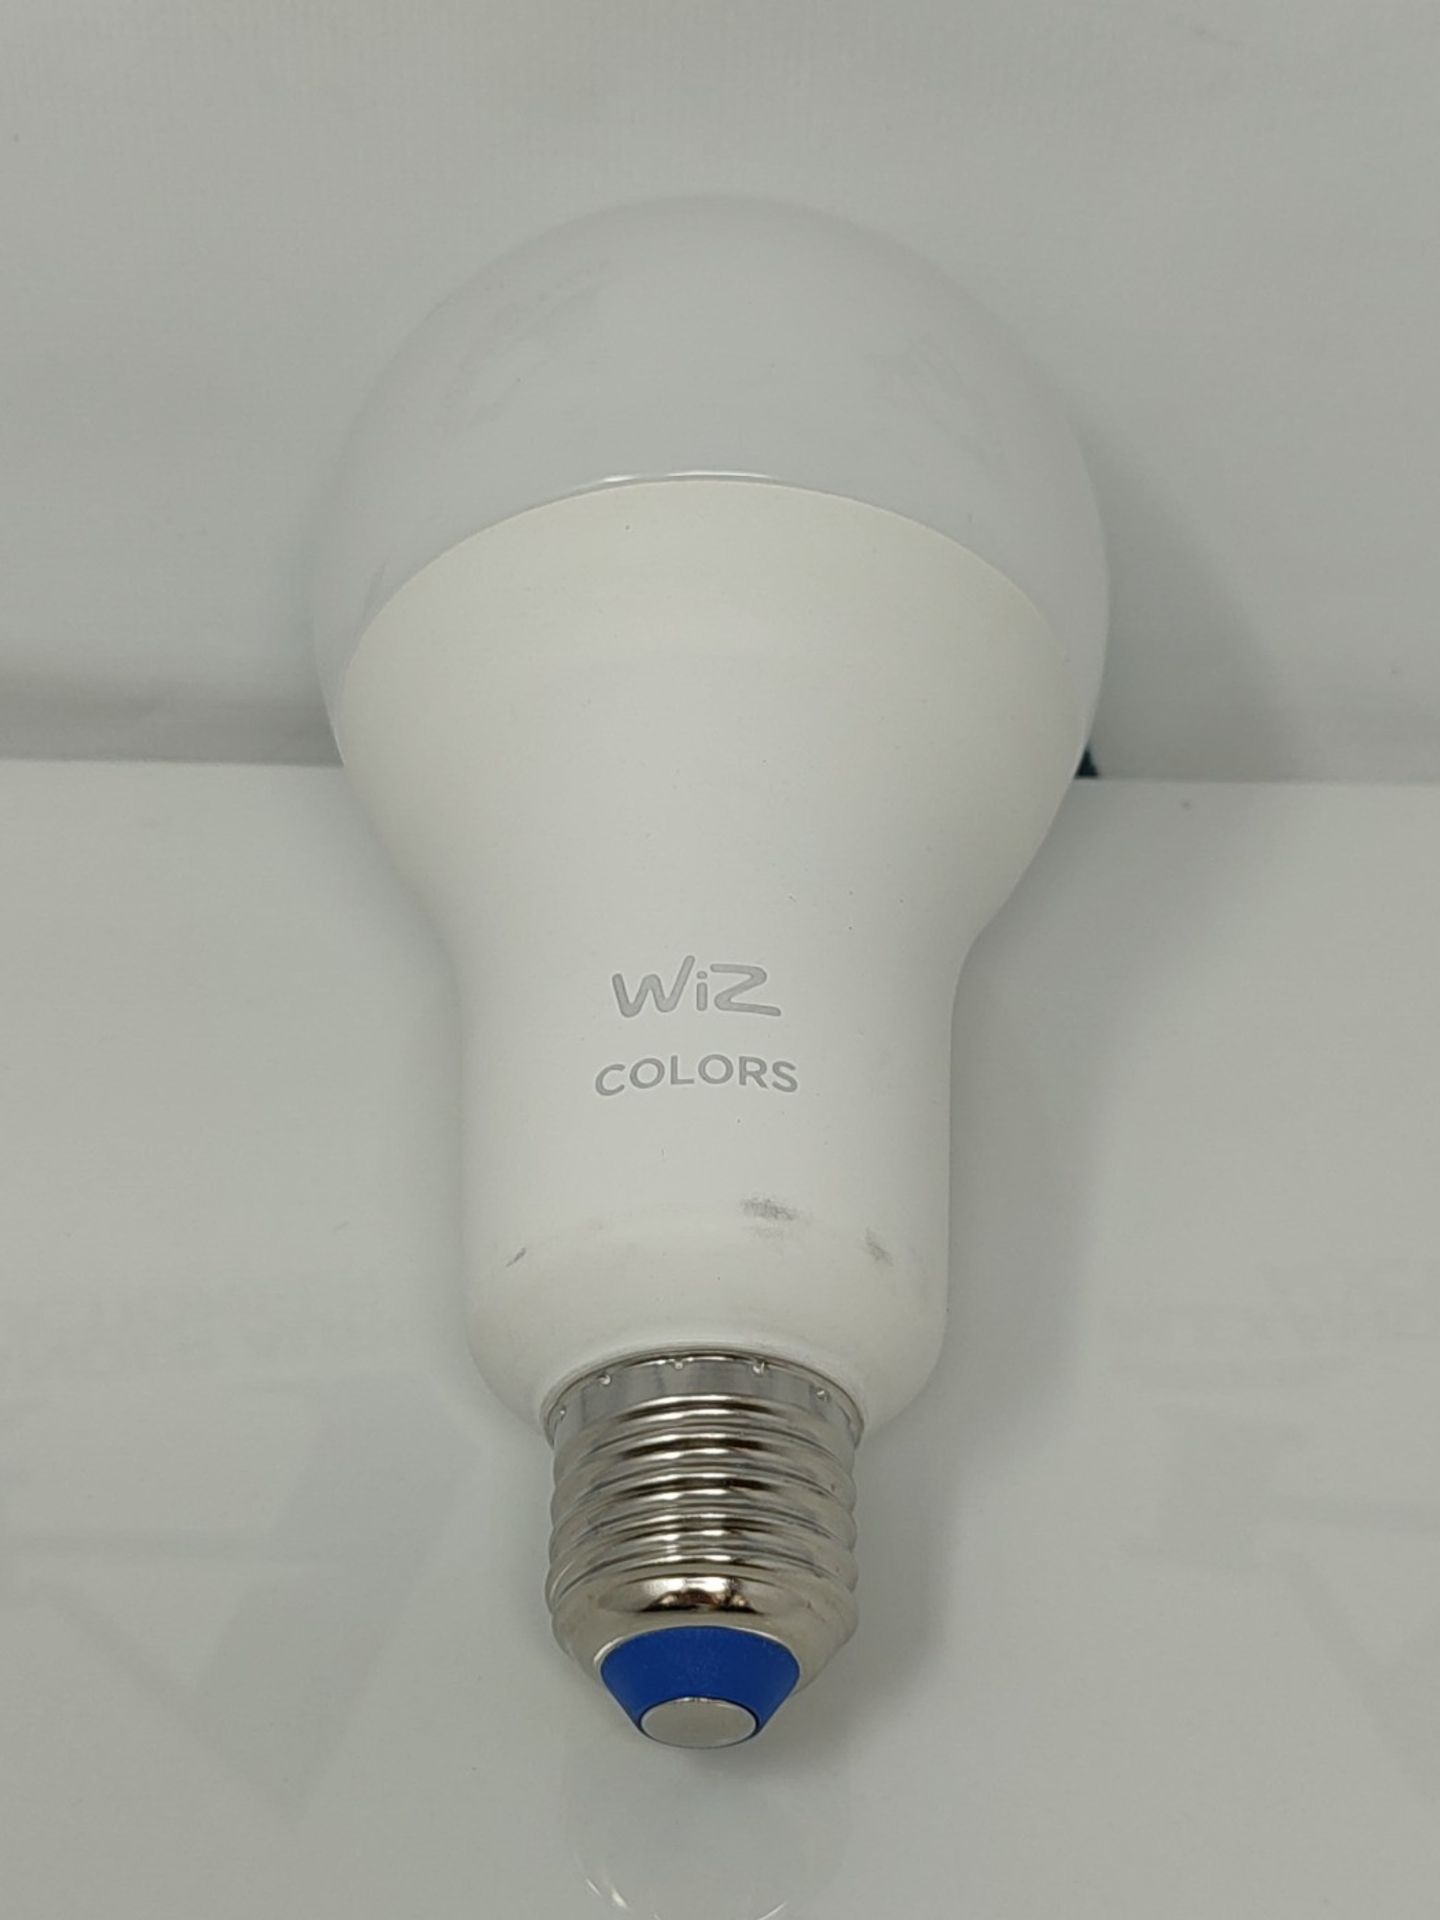 WiZ Colour [E27 Edison Screw] Smart Connected WiFi Light Bulb A80. 150W App Control fo - Image 3 of 3